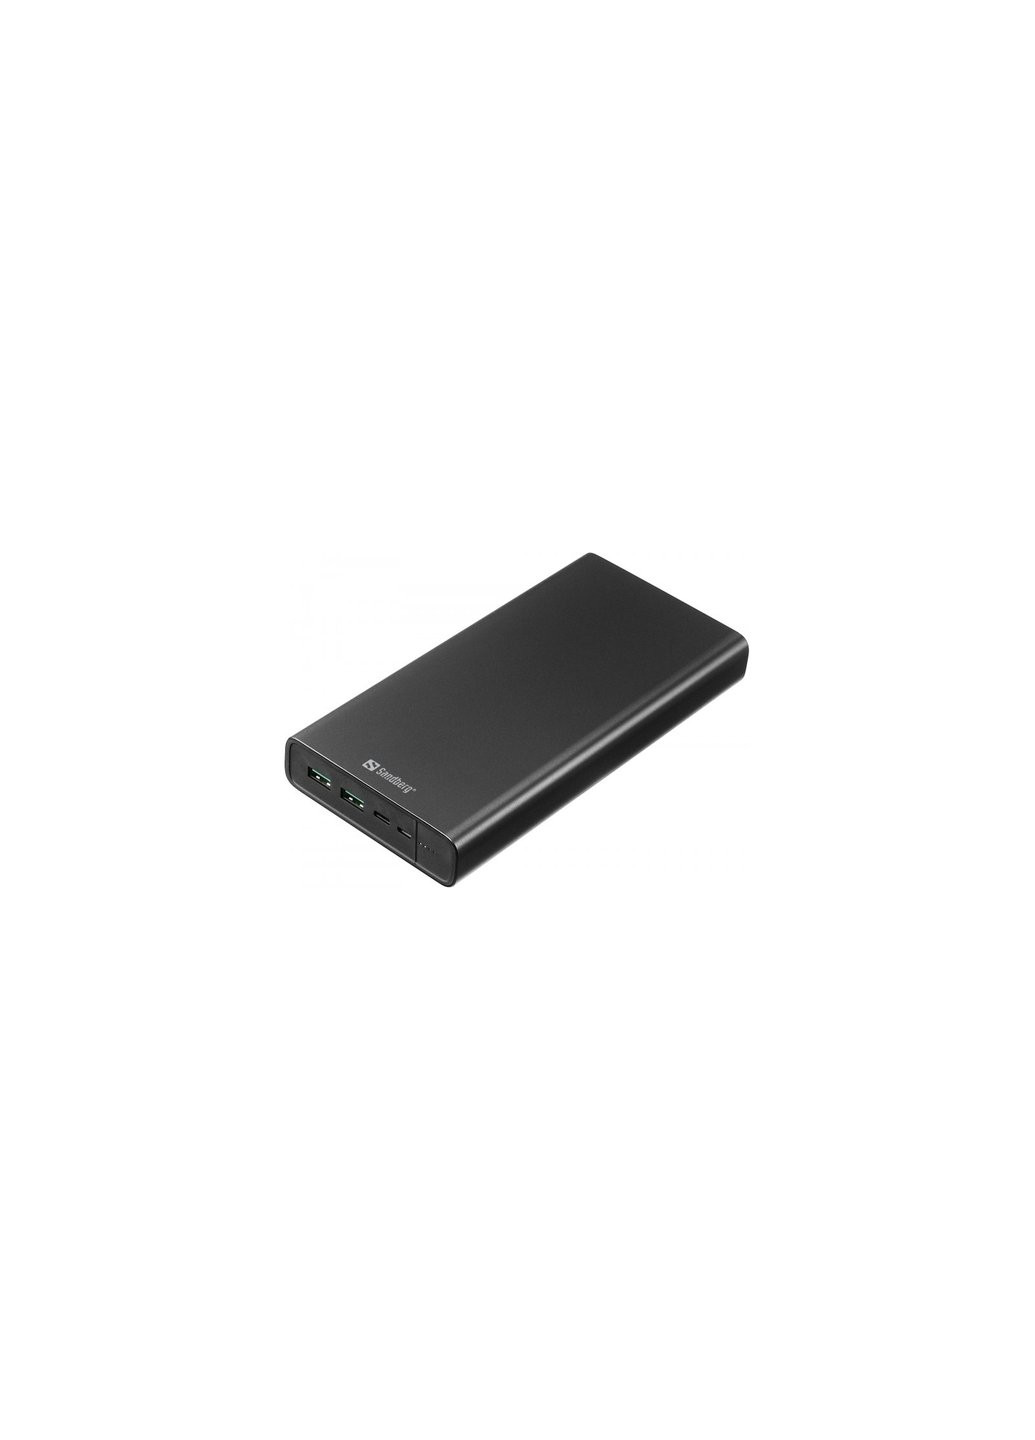 Батарея универсальная 38400mAh, PD/100W, QC/3.0, inp:USB-C/Micro-USB, out:USB-A*2 (420-63) Sandberg